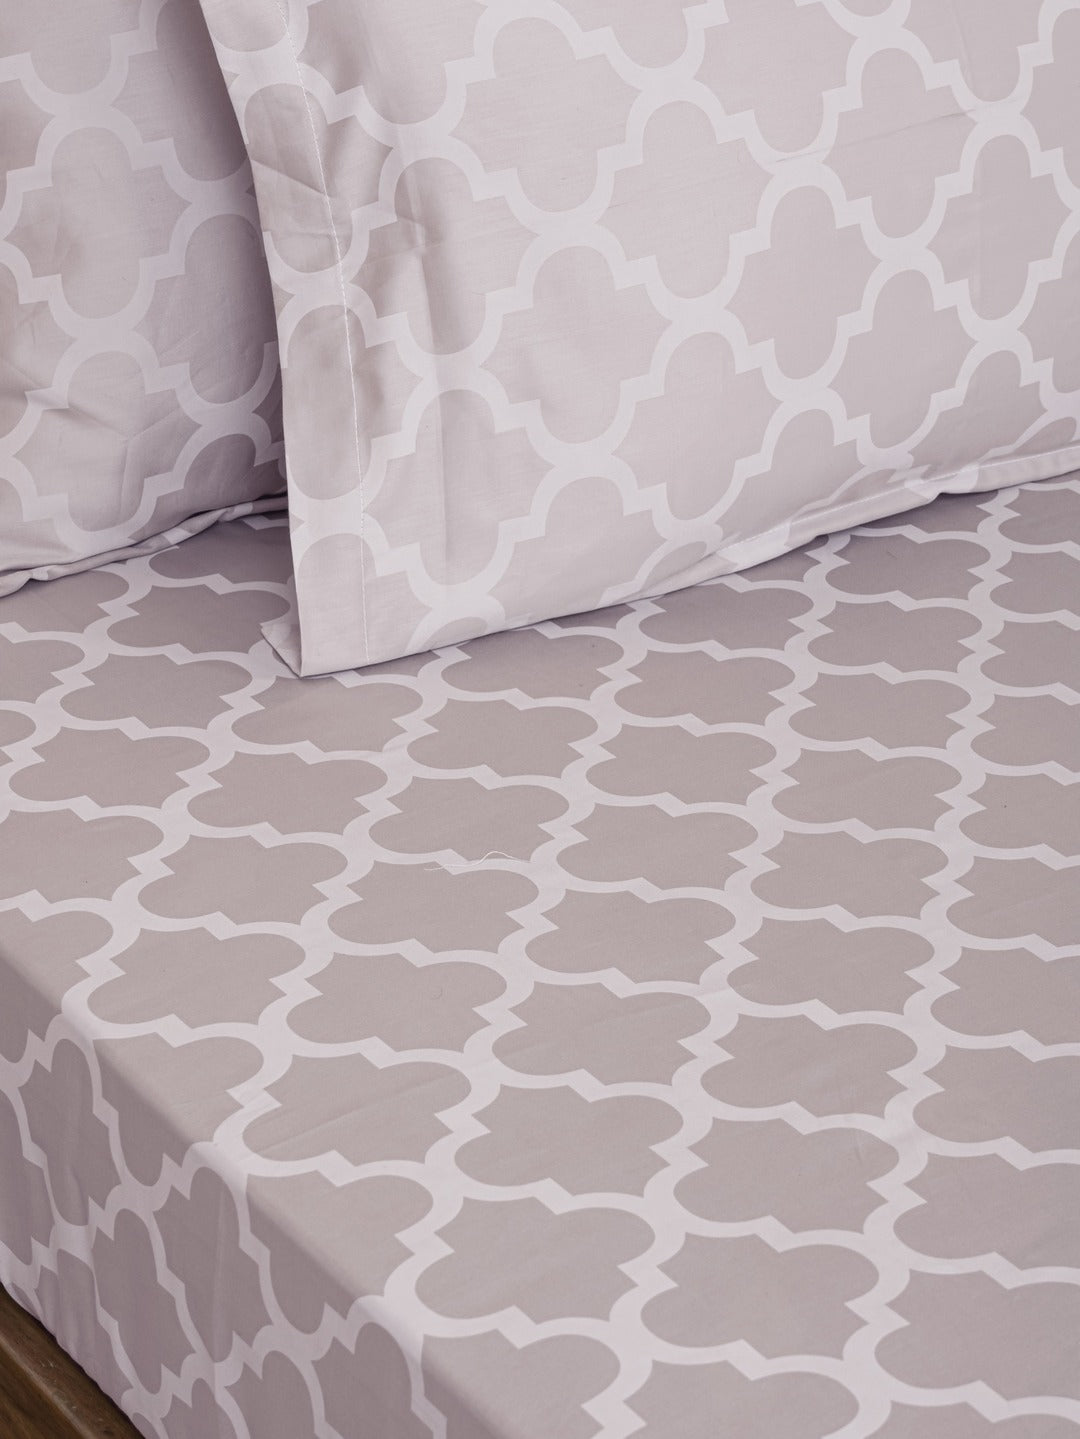 Cotton 400TC King Size Bedsheet With 2 Pillow Covers; Primrose Pink Motif